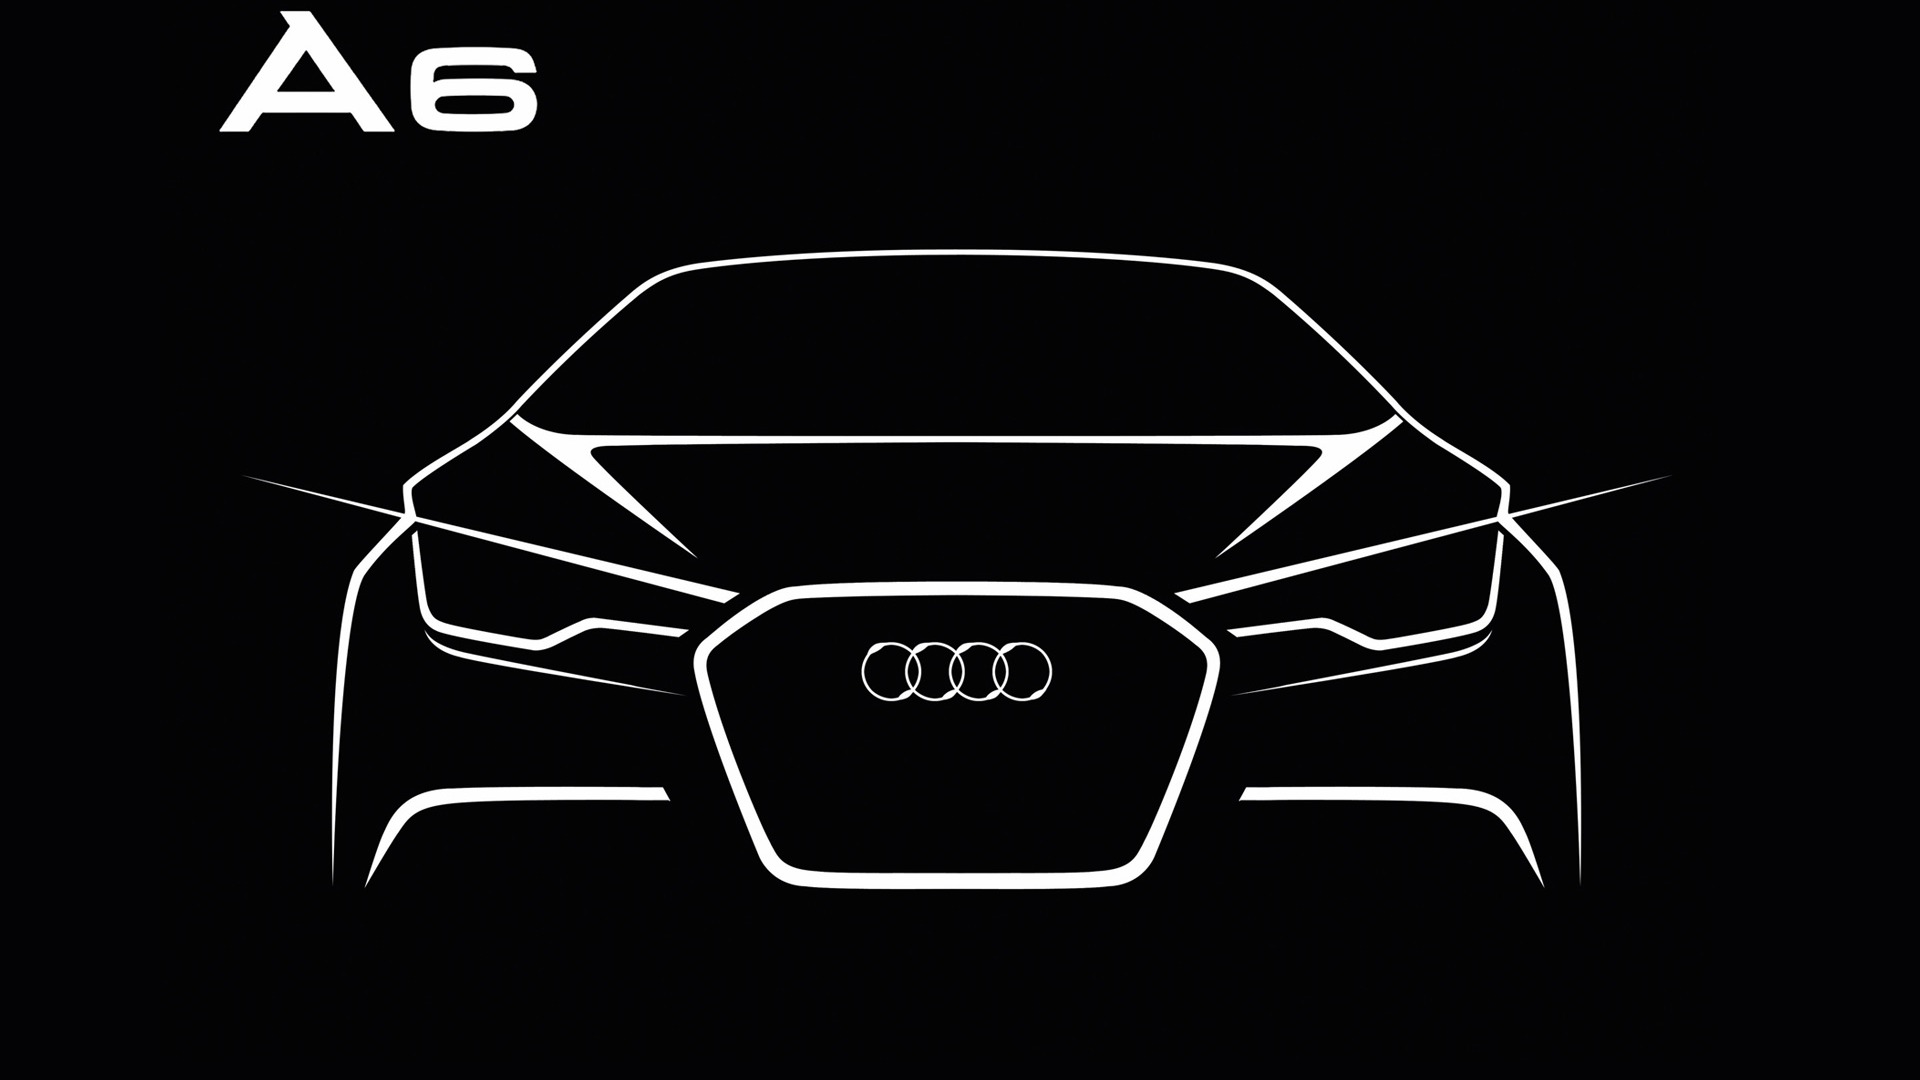 Audi A6 3.0 TDI quattro - 2011 奧迪 #28 - 1920x1080